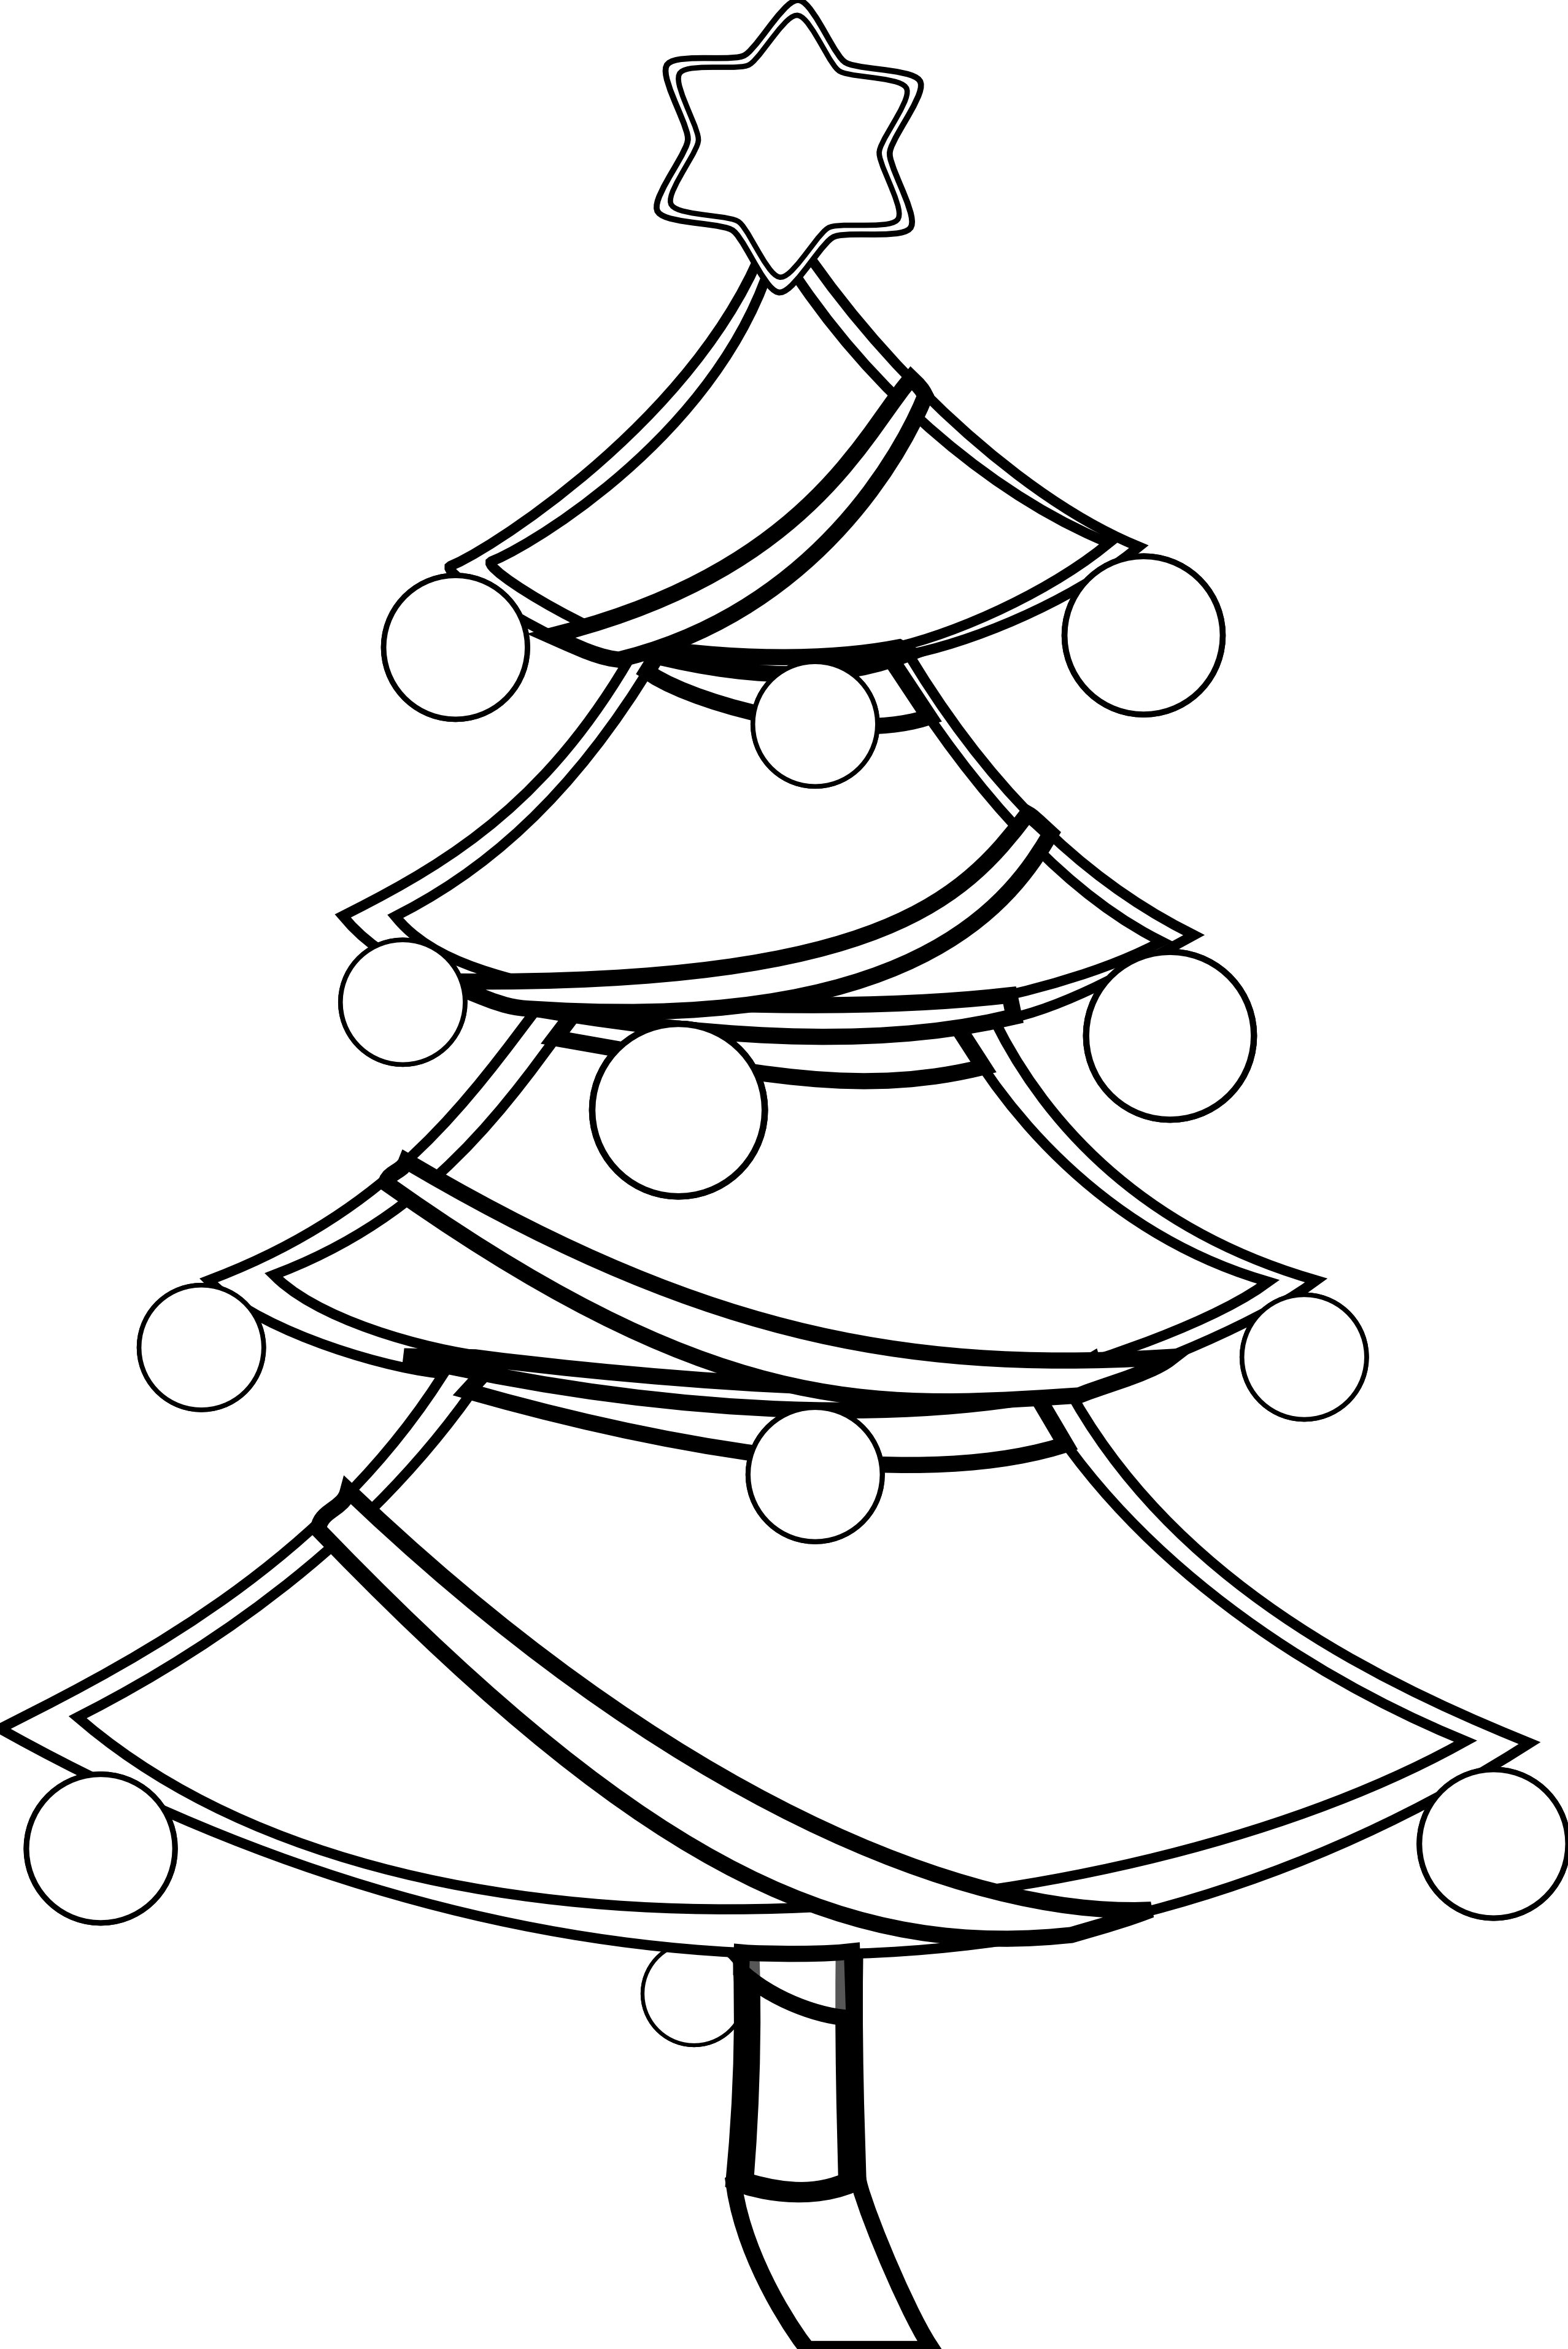 Free Black And White Christmas Wallpaper, Download Free Clip Art, Free Clip Art on Clipart Library